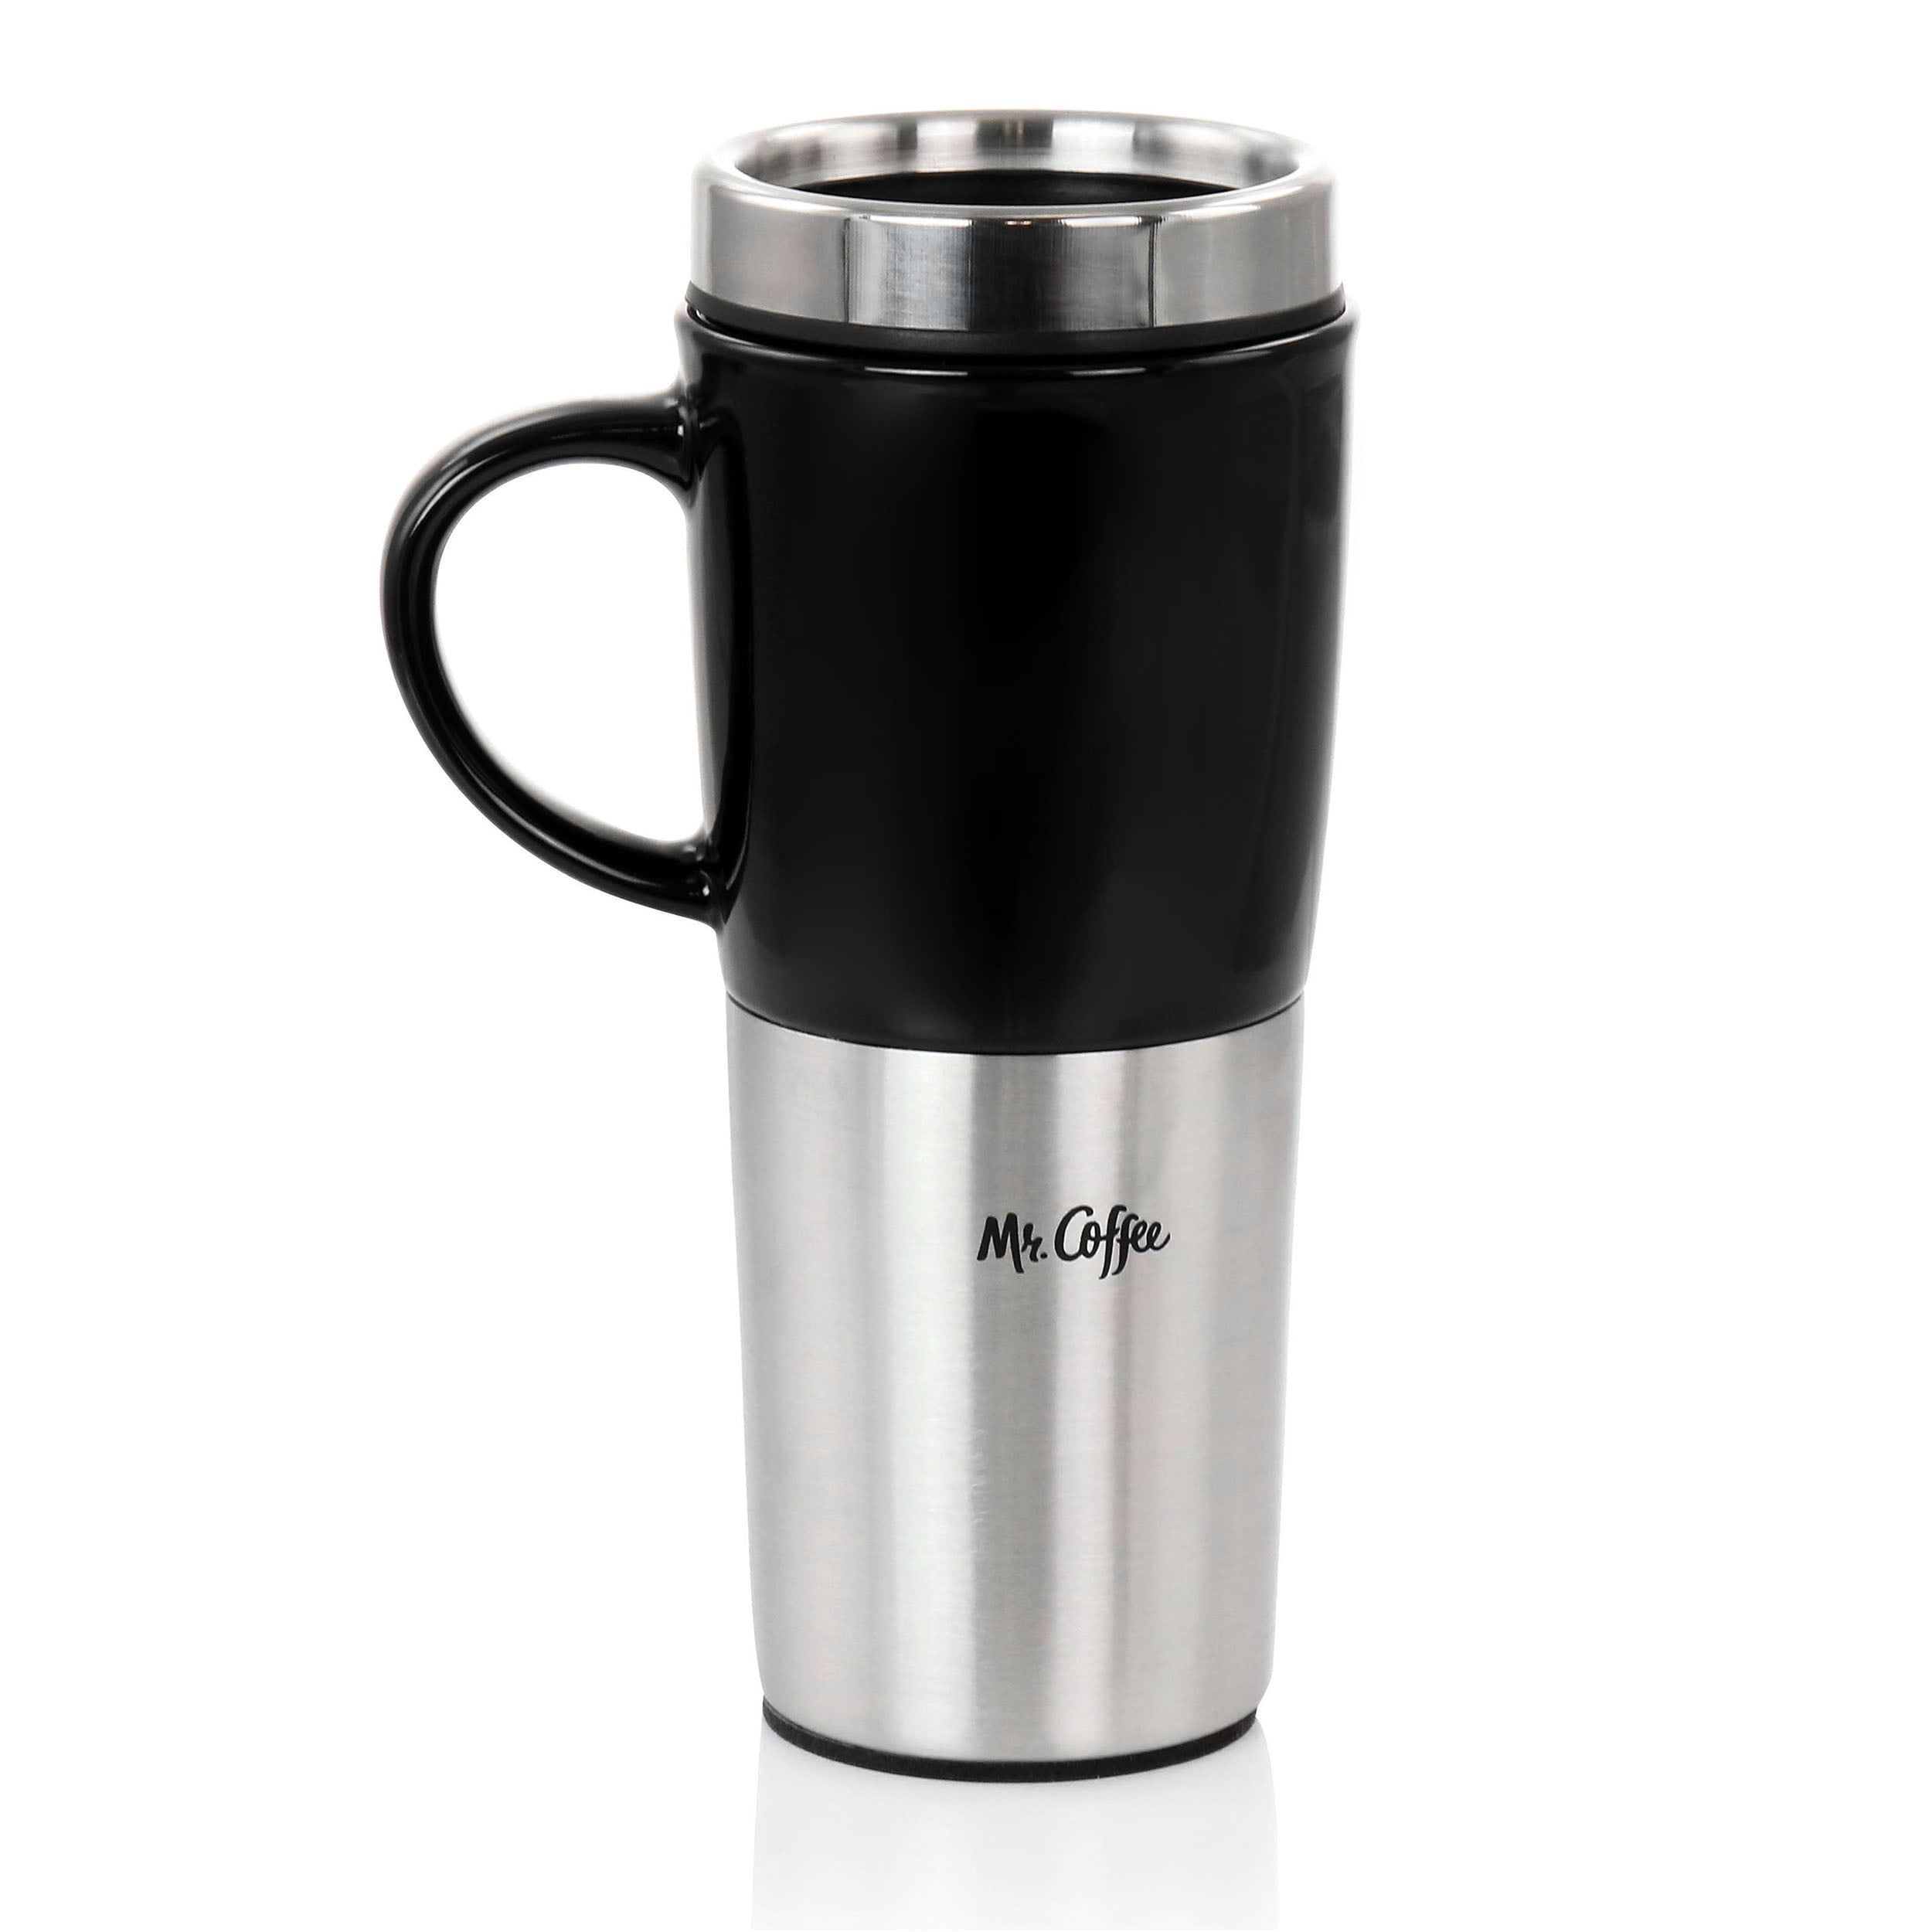 Mr Coffee Travel Mug W/Lid and Re-usable Sleeve 16 OZ Blue White